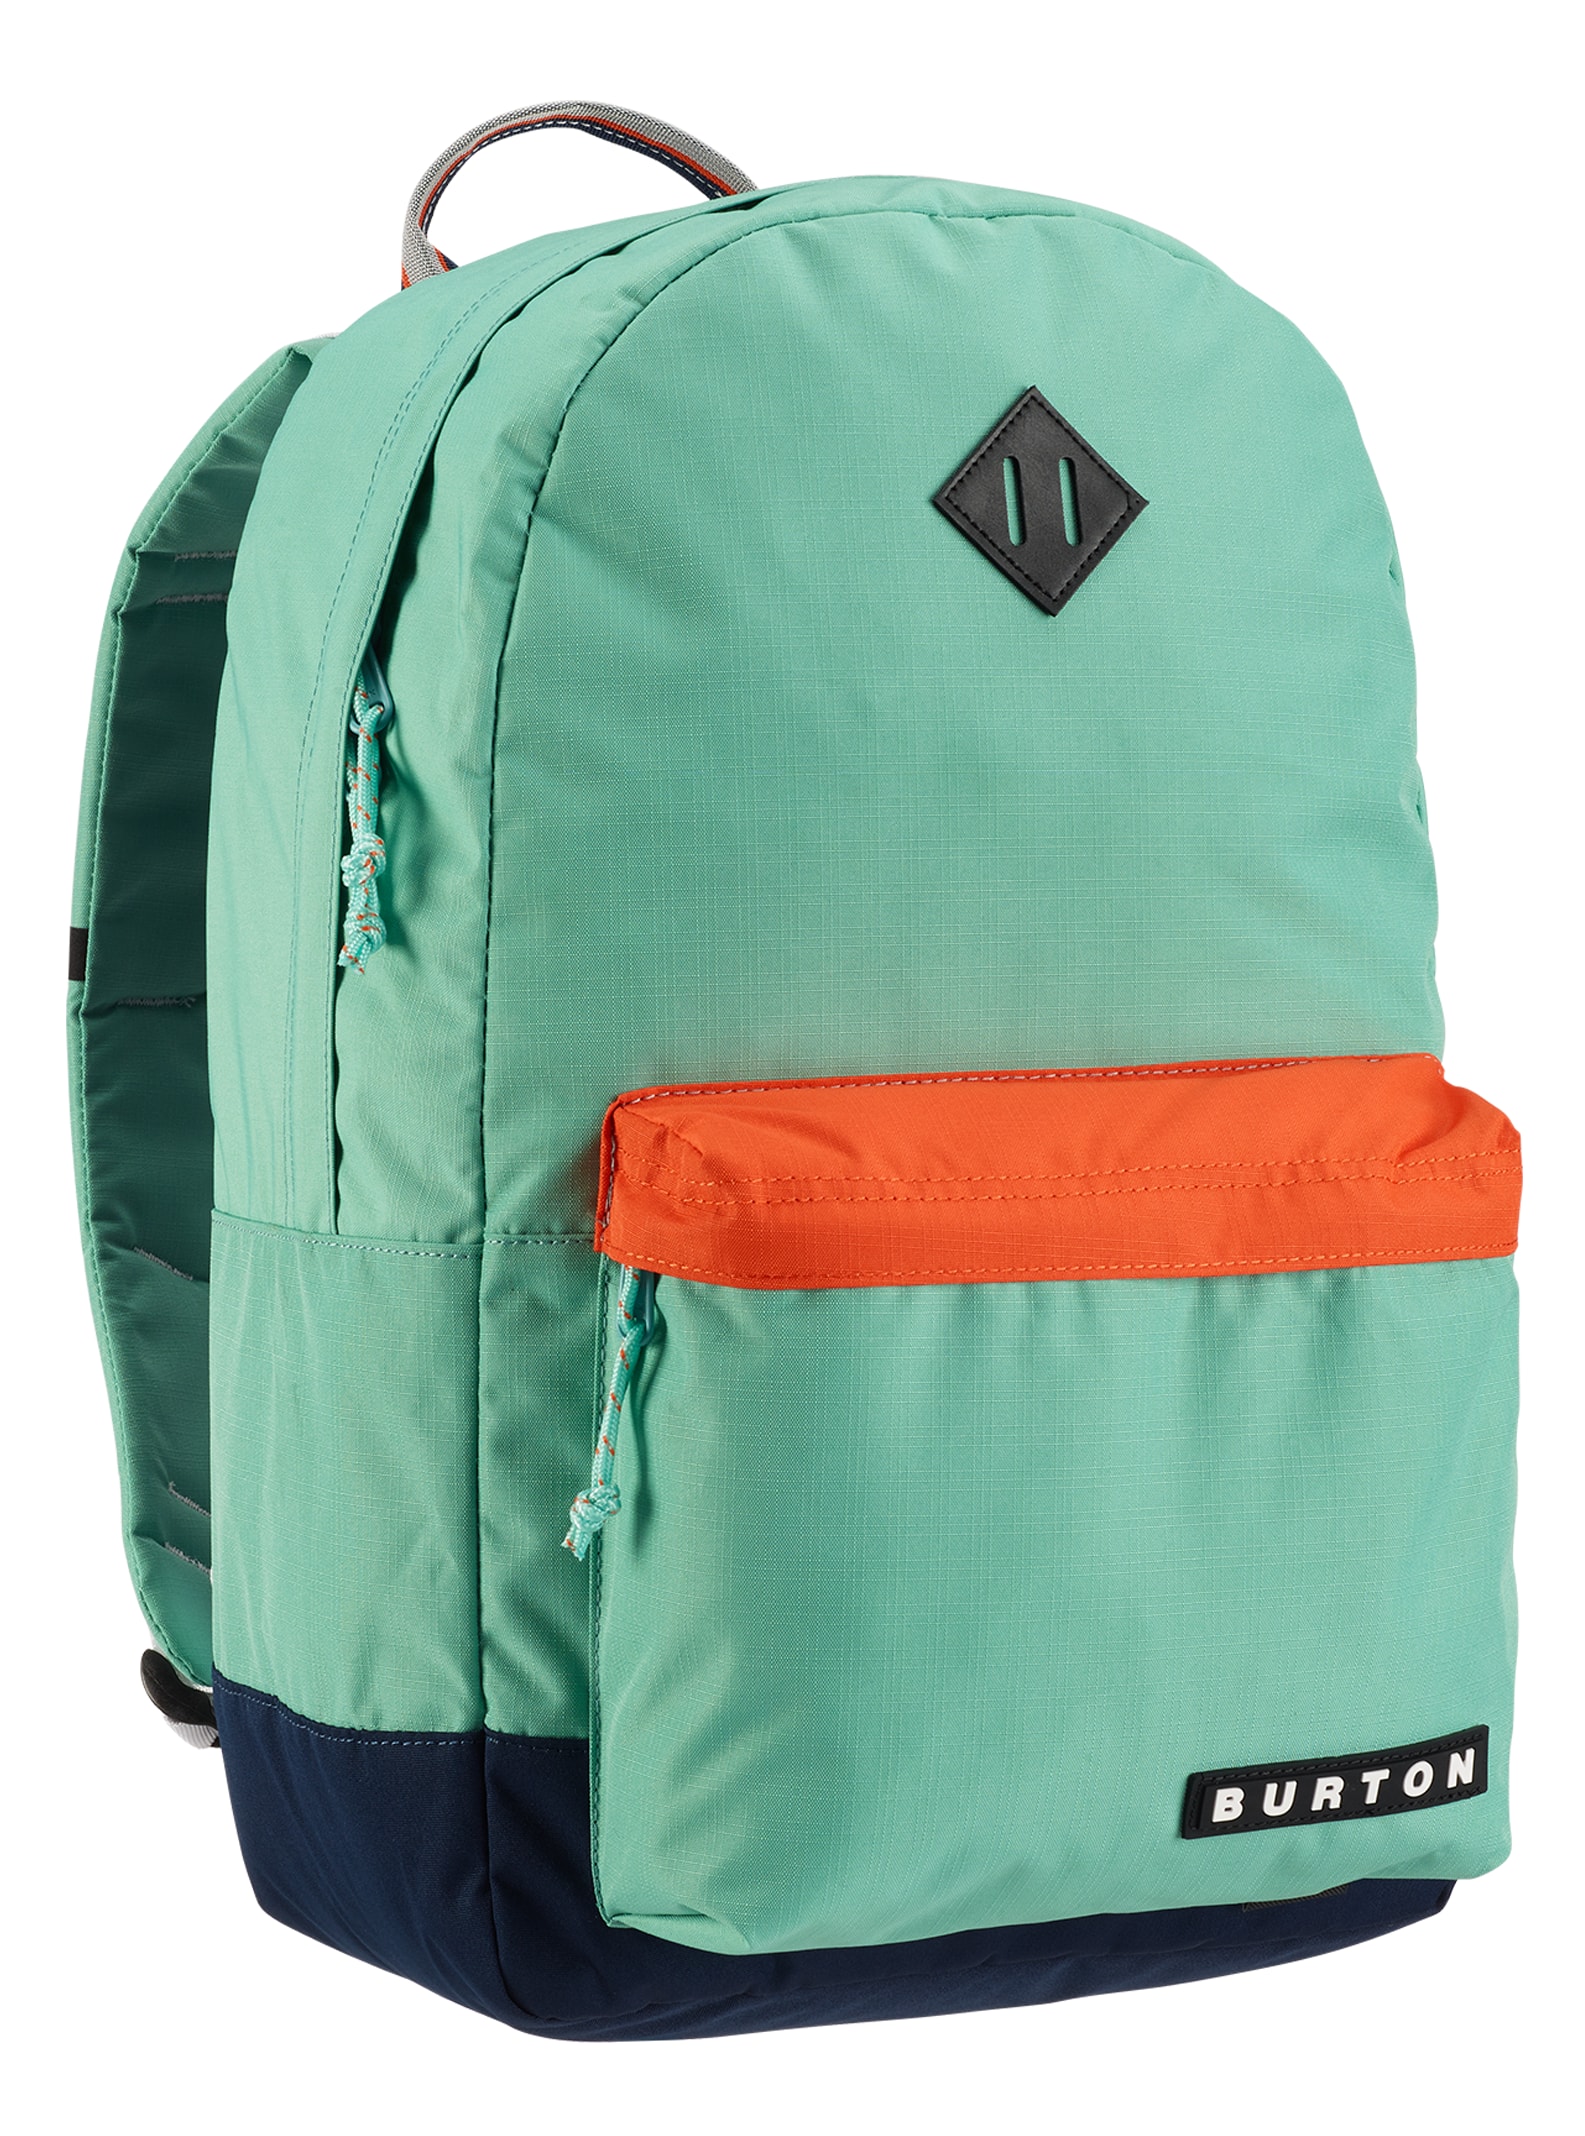 Burton Kettle 20L Backpack | Burton.com Spring 2020 US